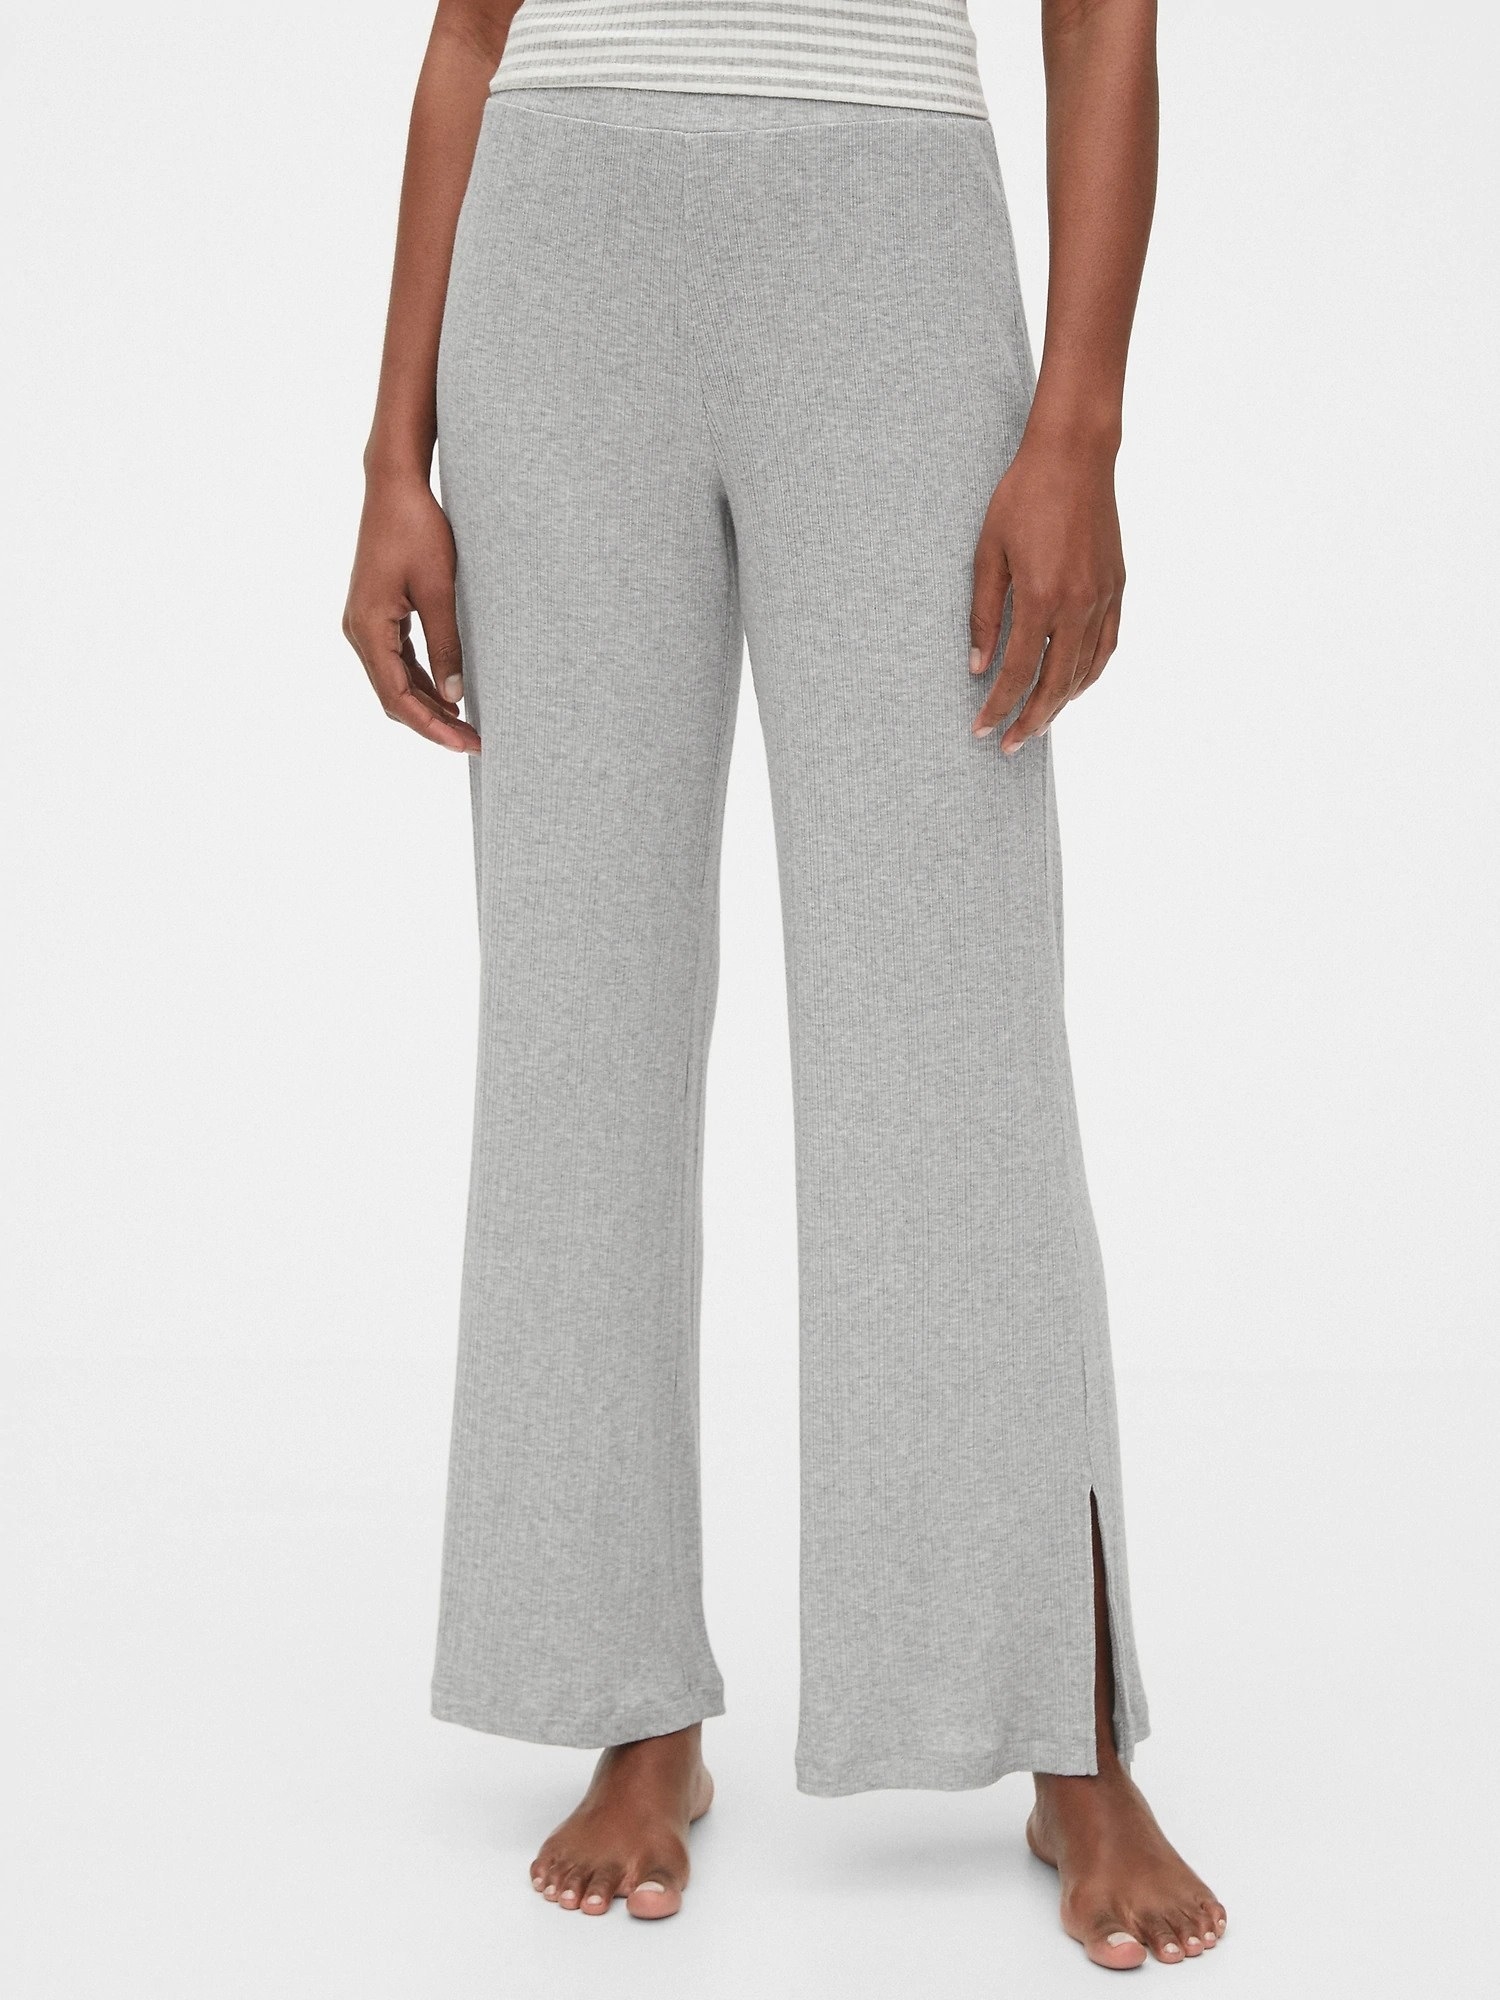 Model wearing gray lounge pants